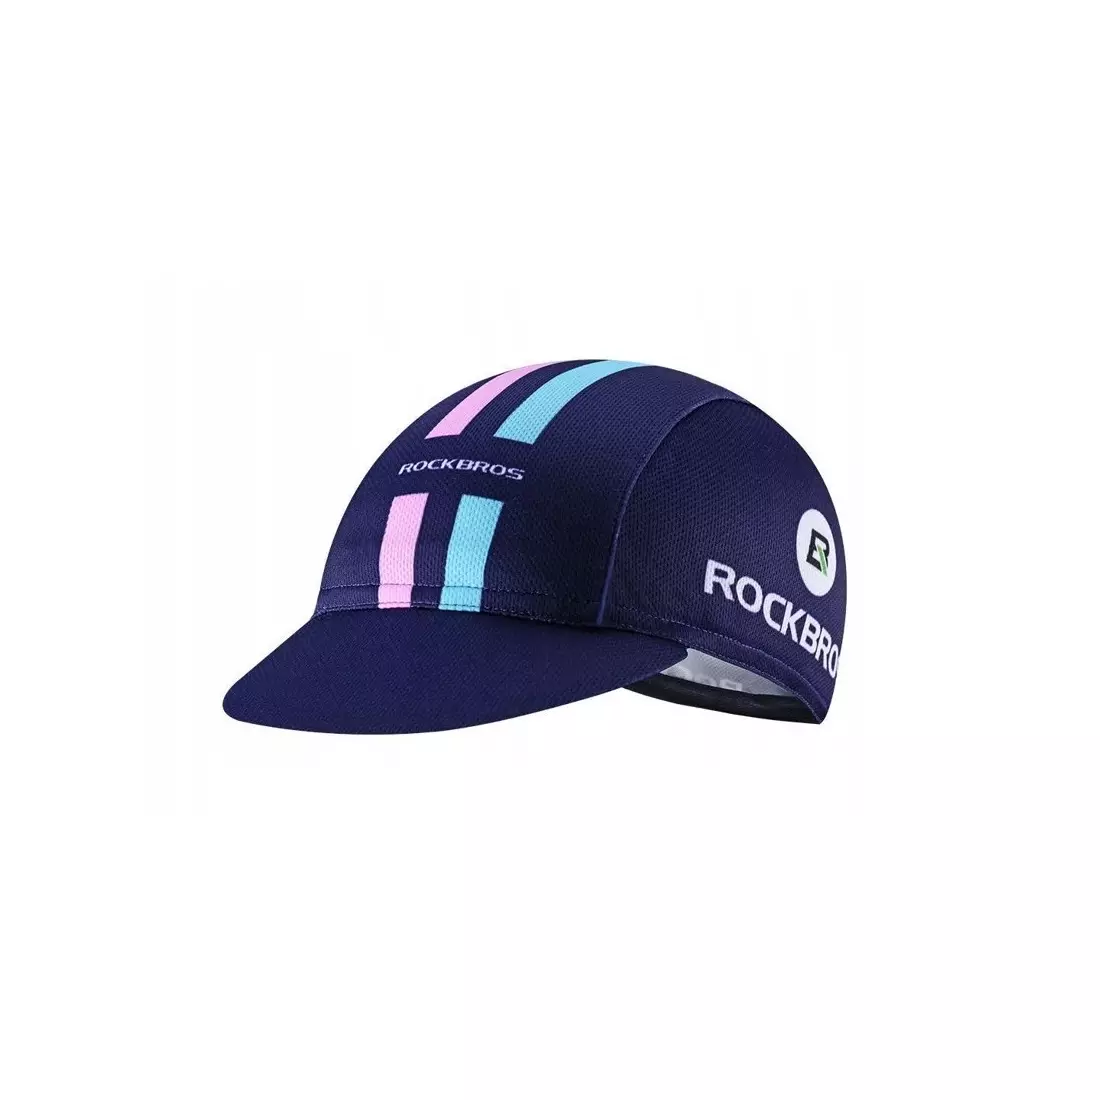 Rockbros cycling cap, navy blue MZ10010